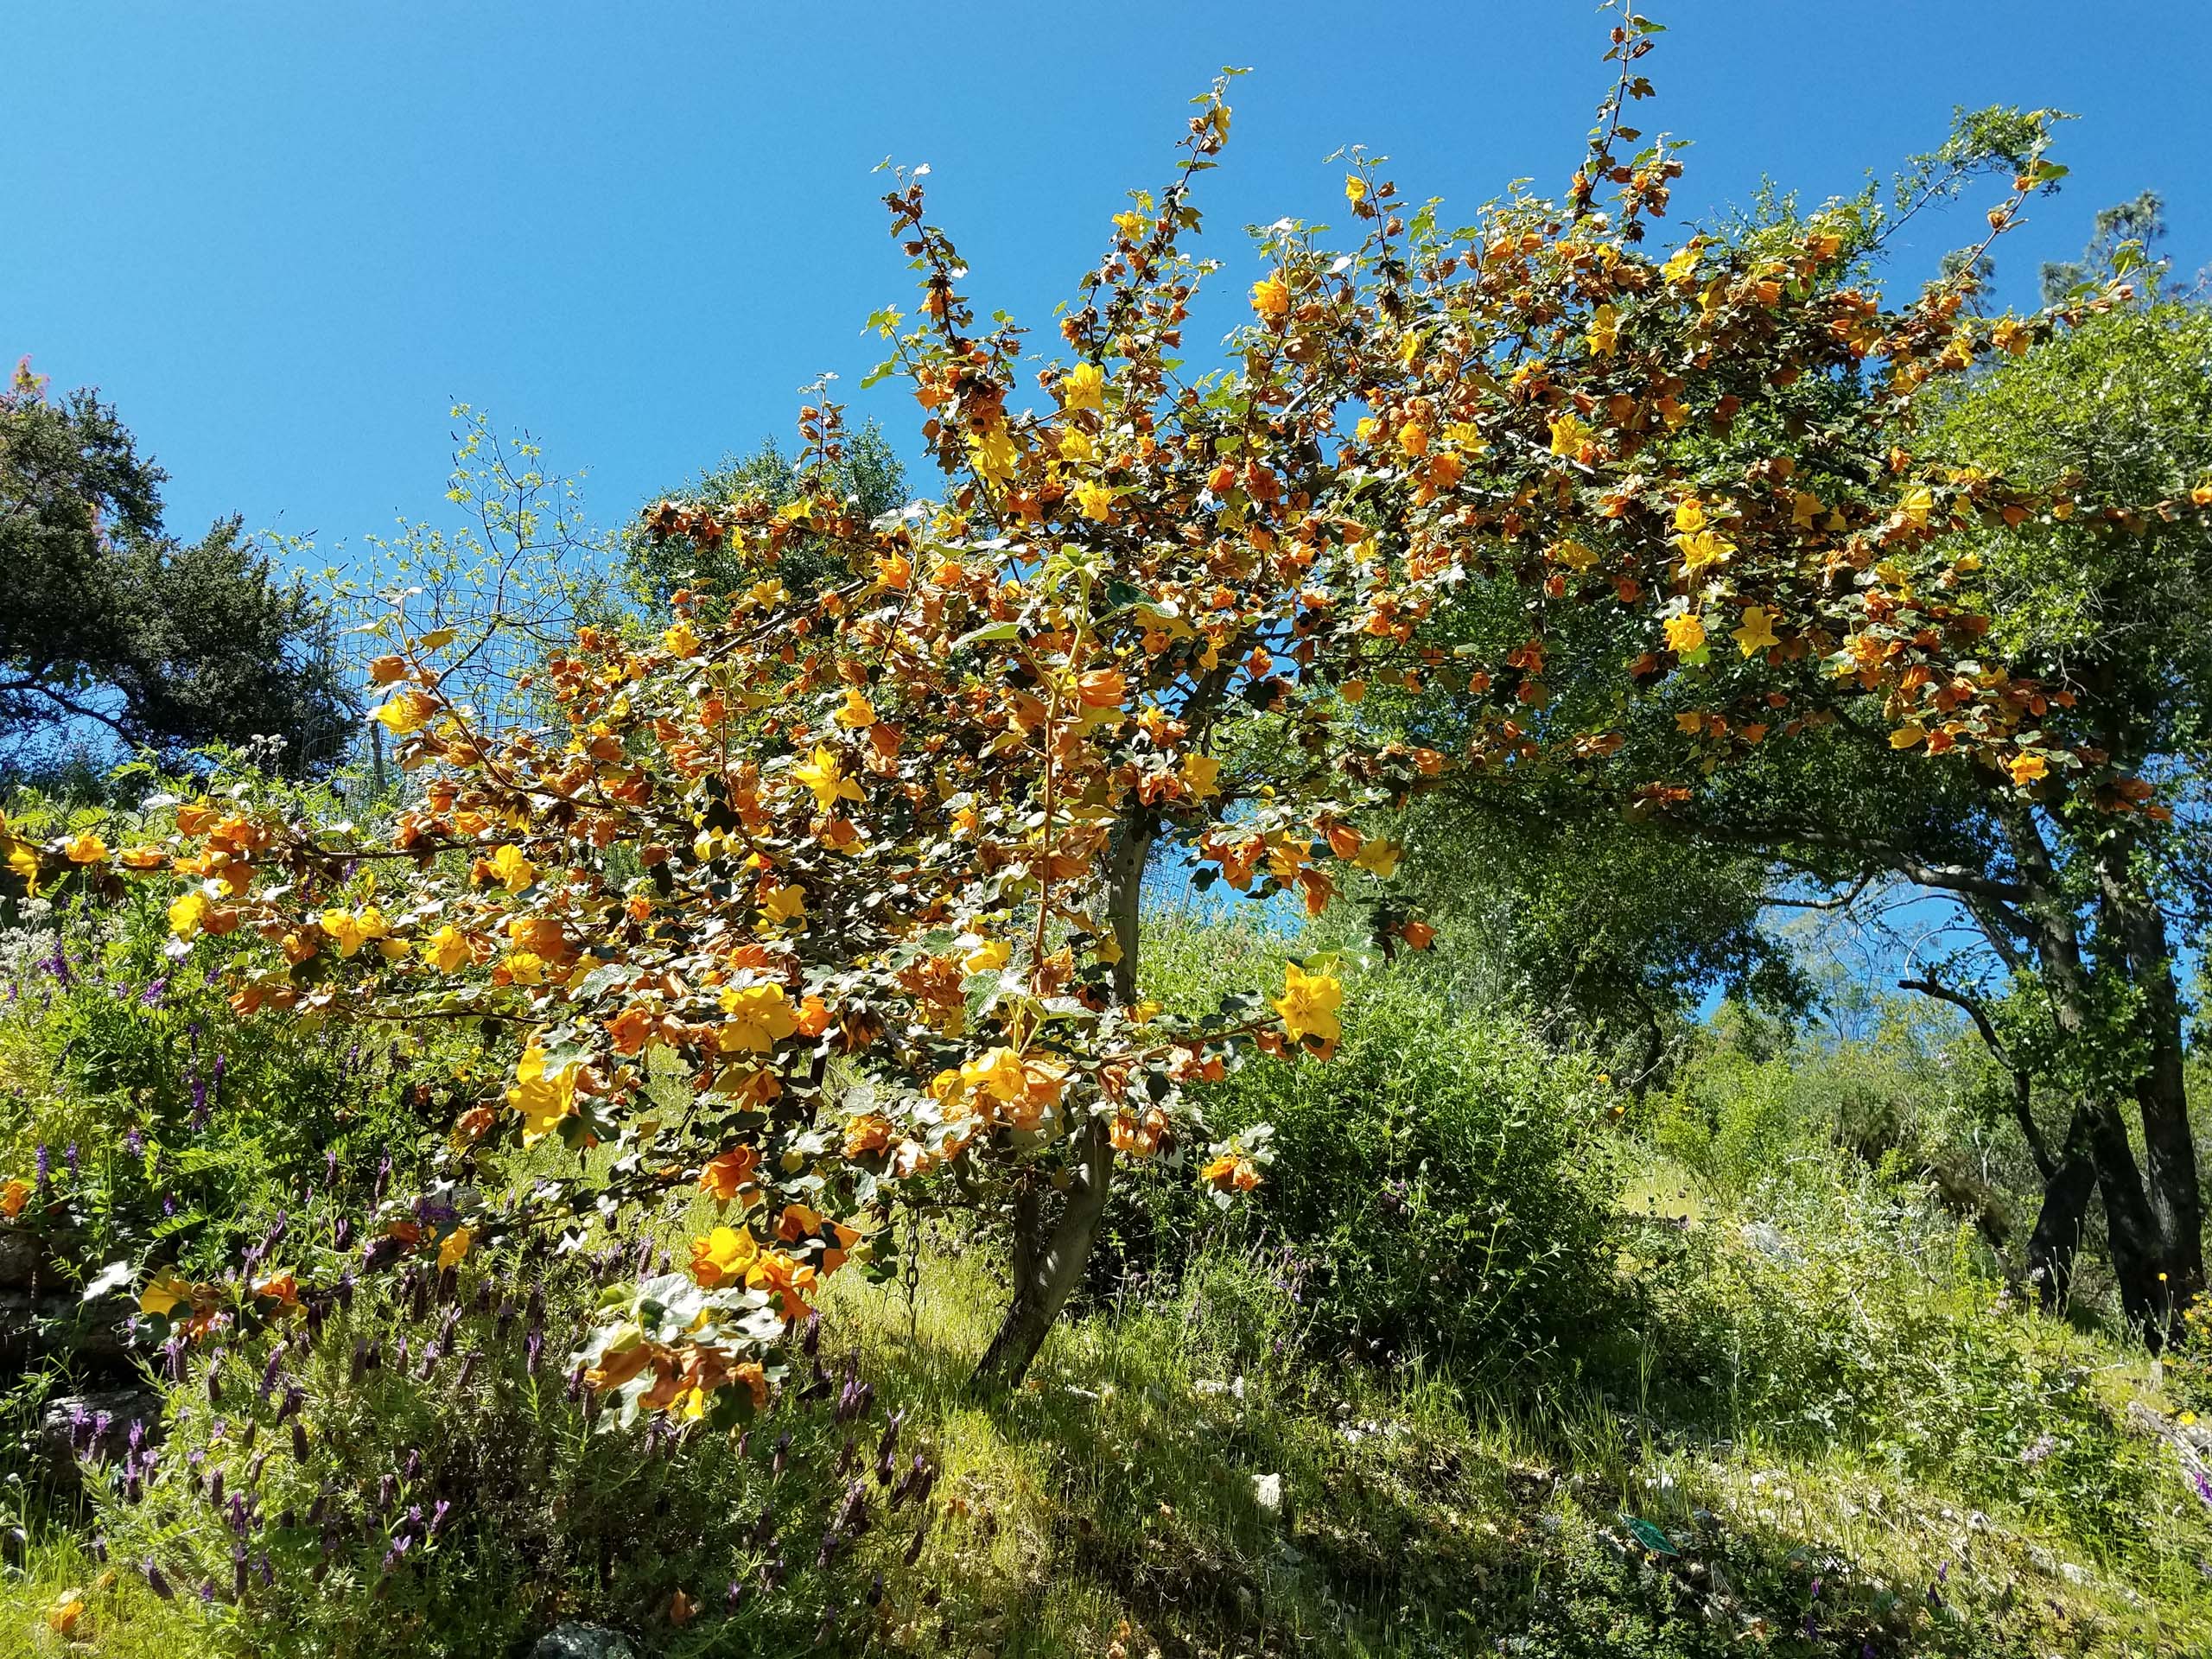 California flannel bush. D. Mandel.